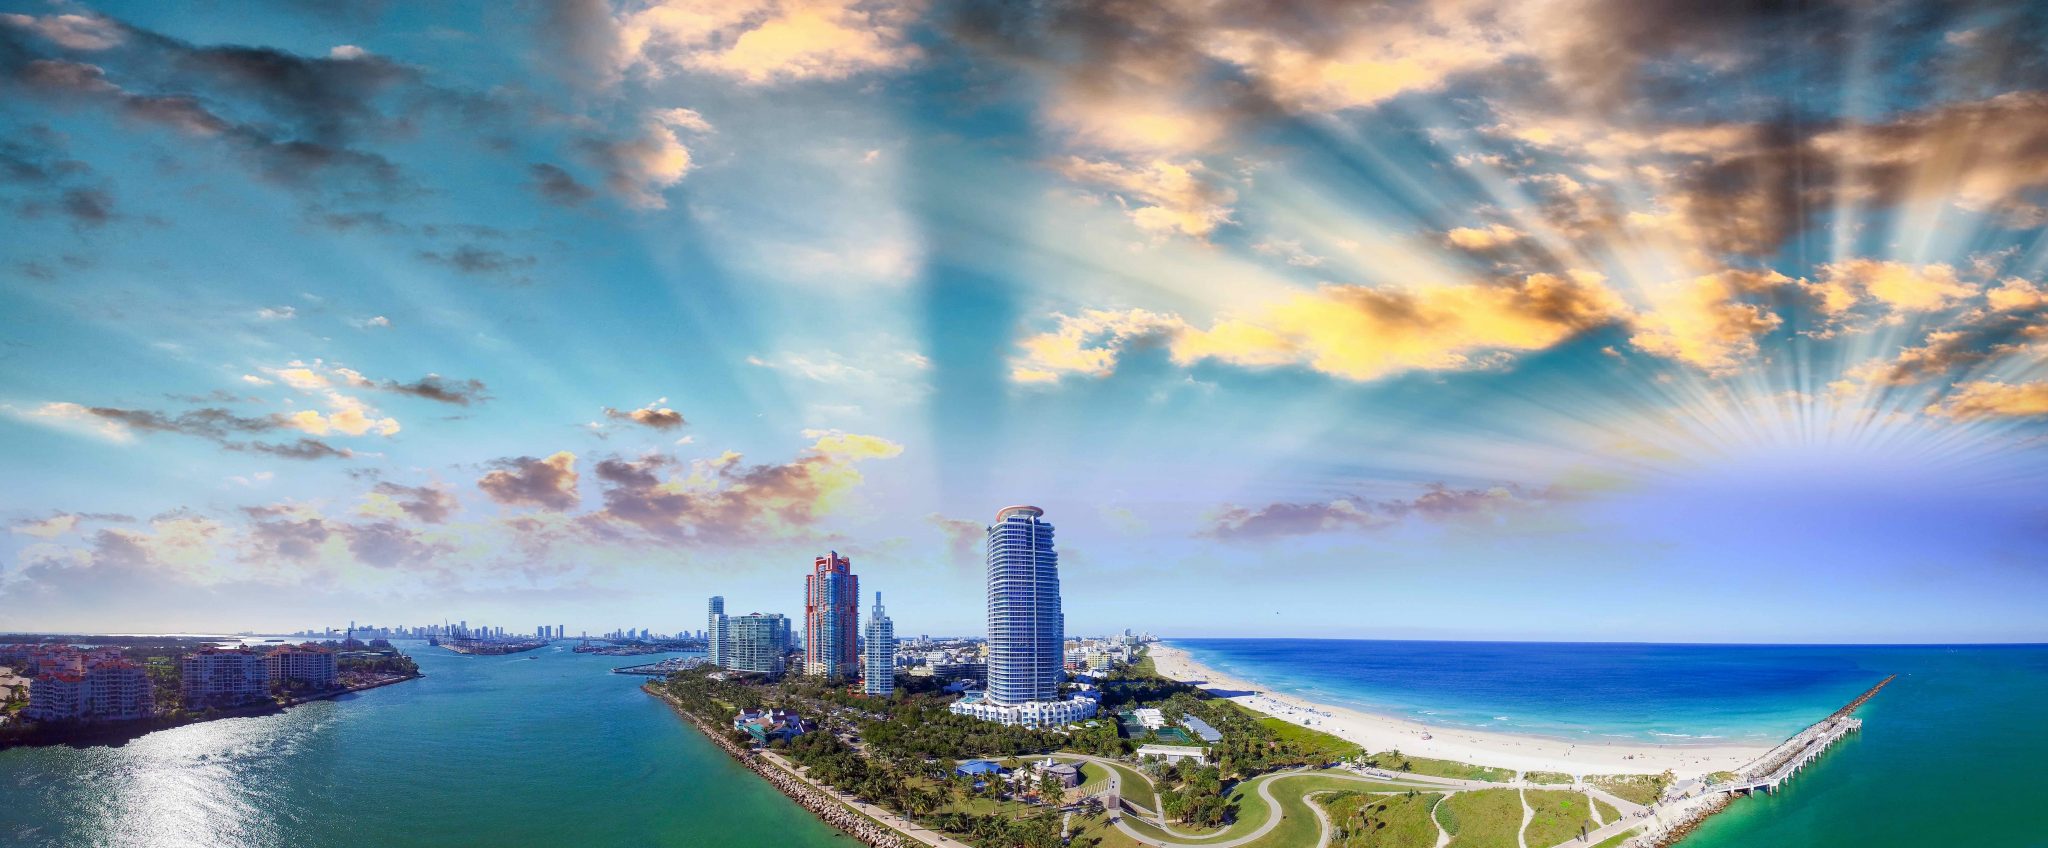 Miami Beach sunset skyline from South Pointe Park, Aerial view – Florida, USA